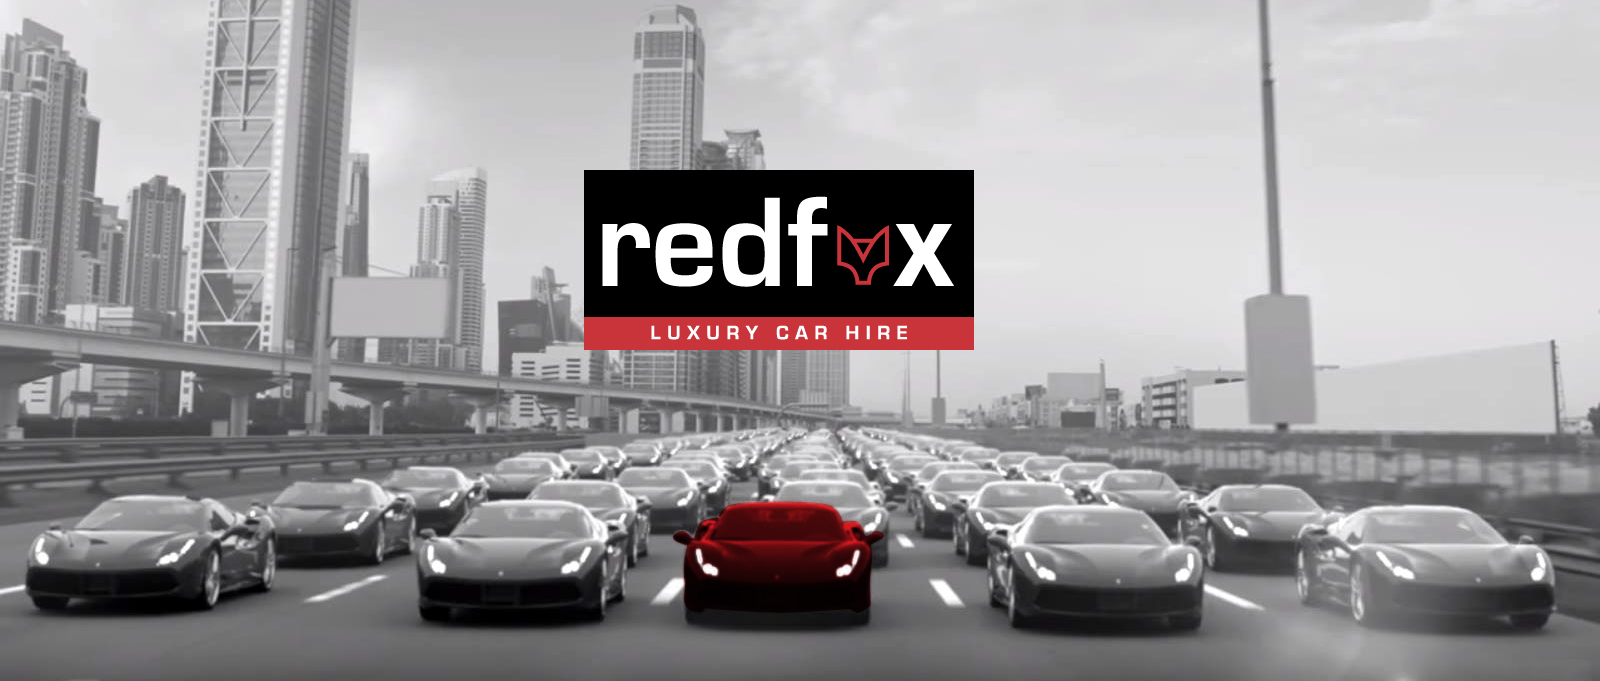 Red Fox Luxury Car Hire